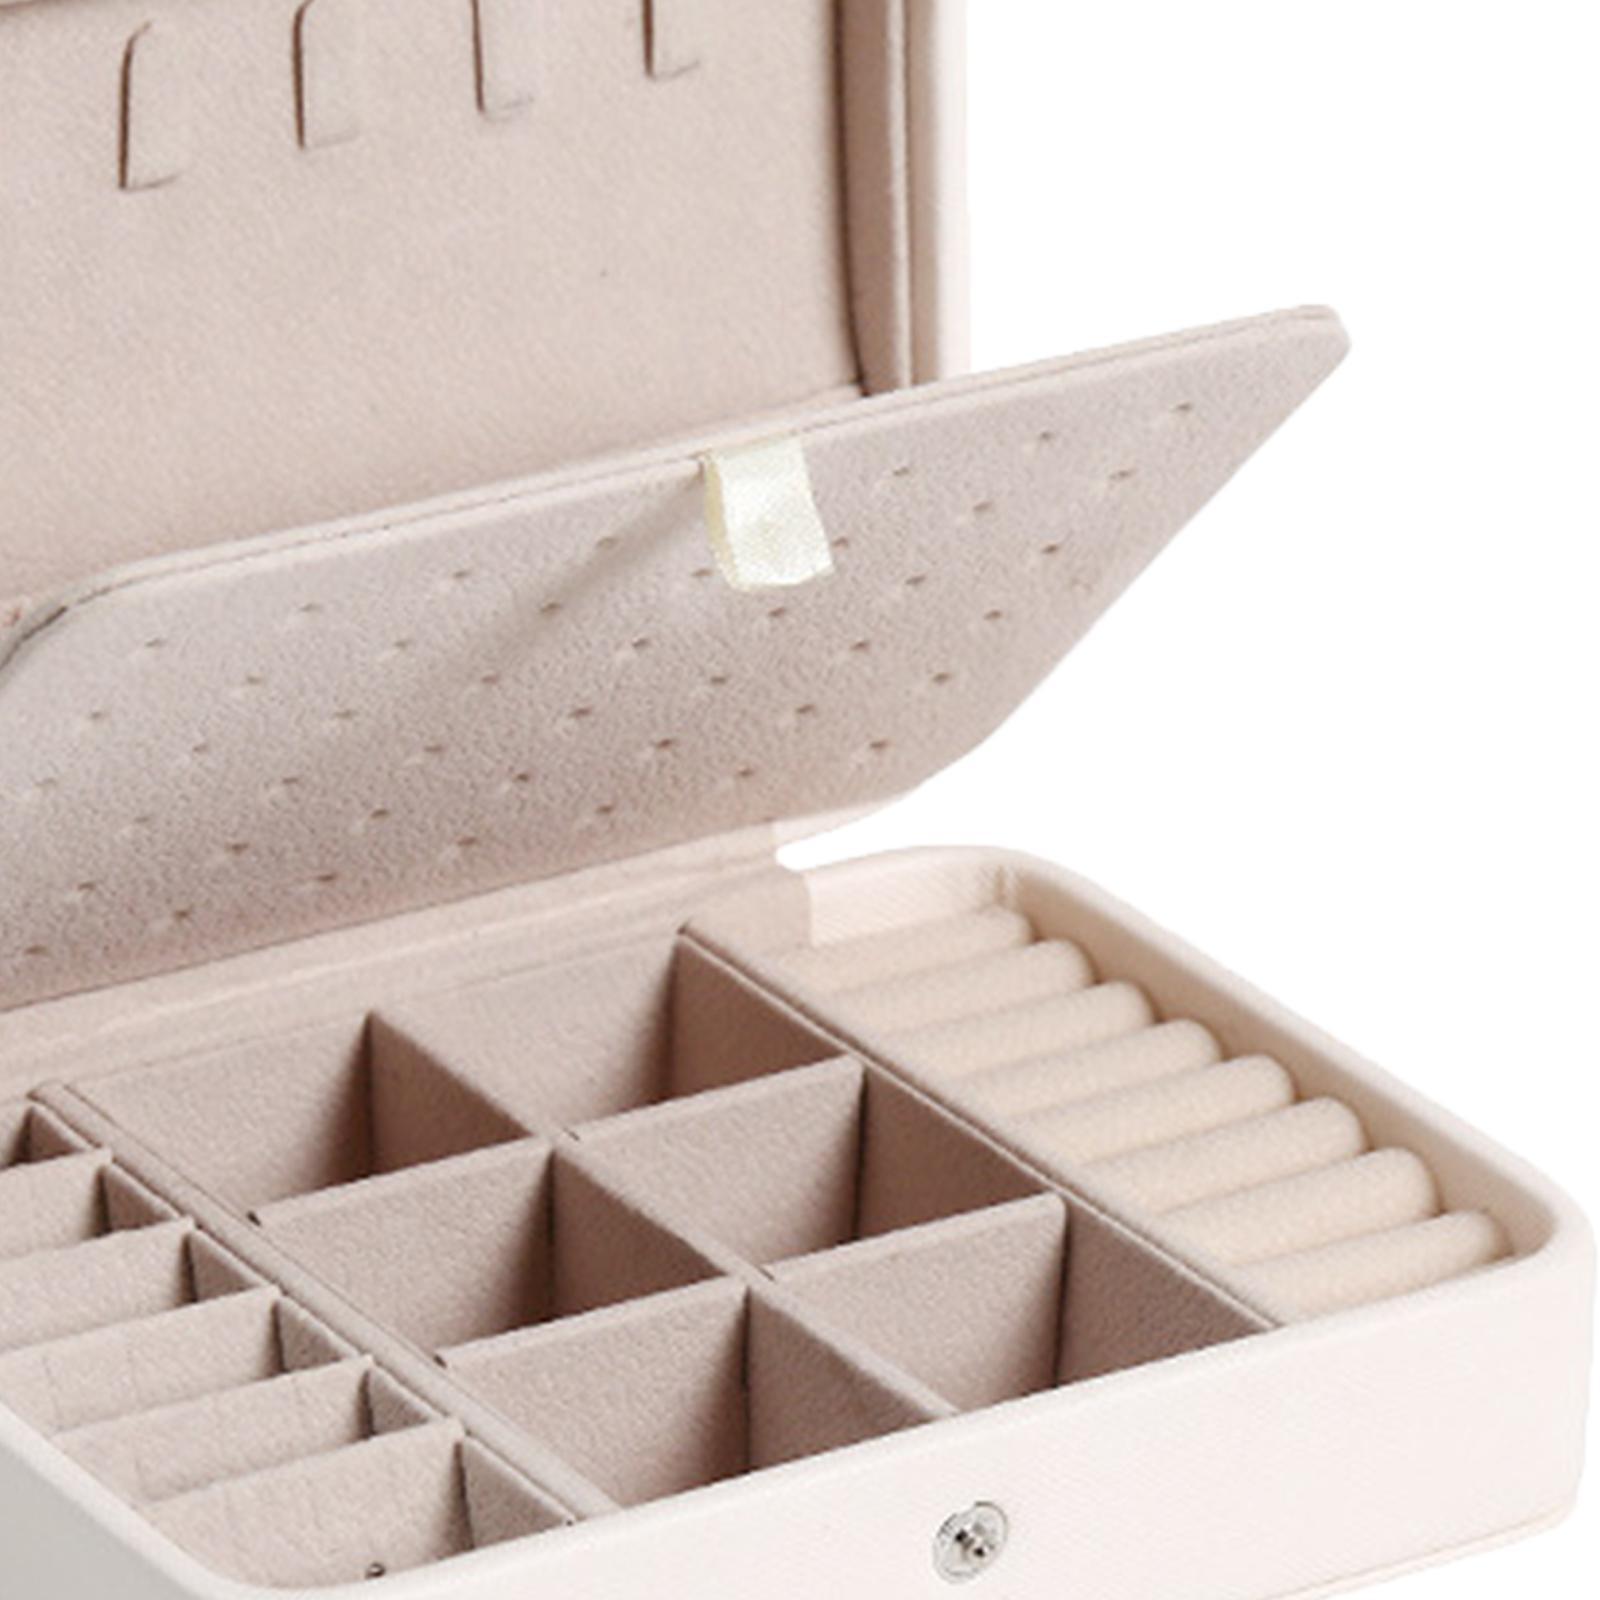 Jewelry Box Leather Double Layer Travel Storage Case Organizer